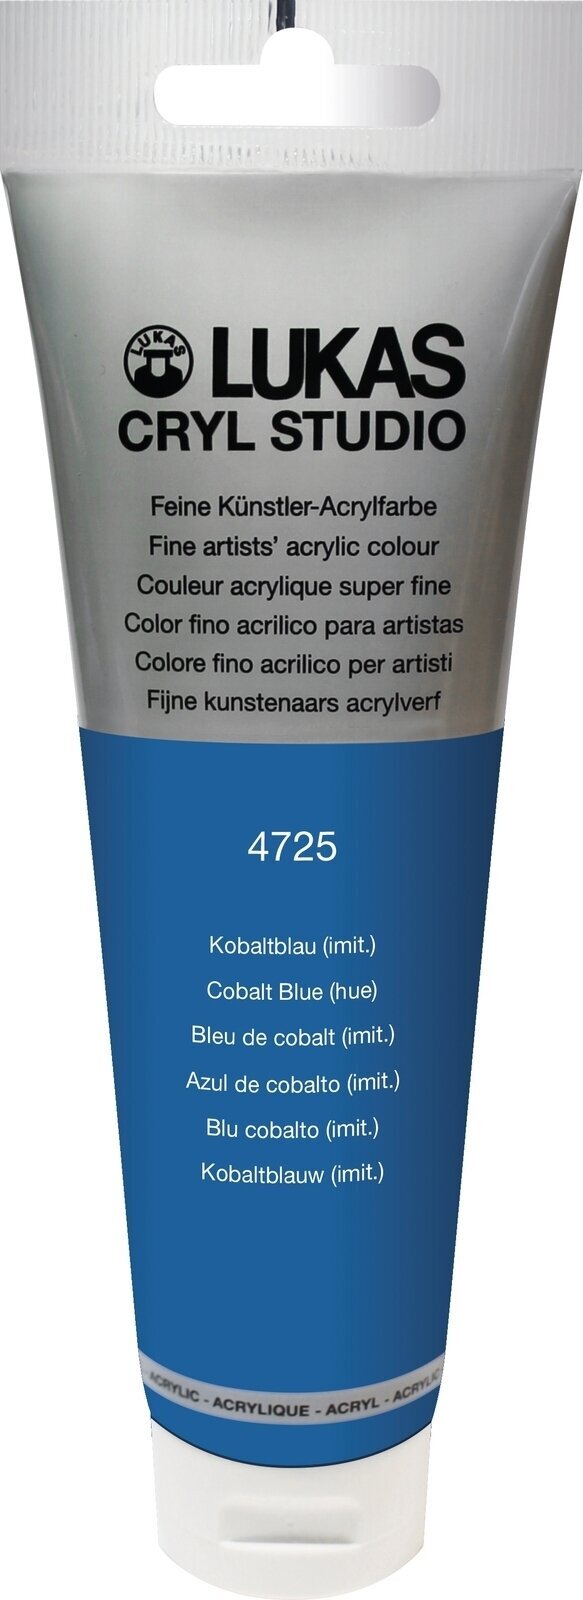 Colore acrilico Lukas Cryl Studio Acrylic Paint Plastic Tube Colori acrilici Cobalt Blue Hue 125 ml 1 pz